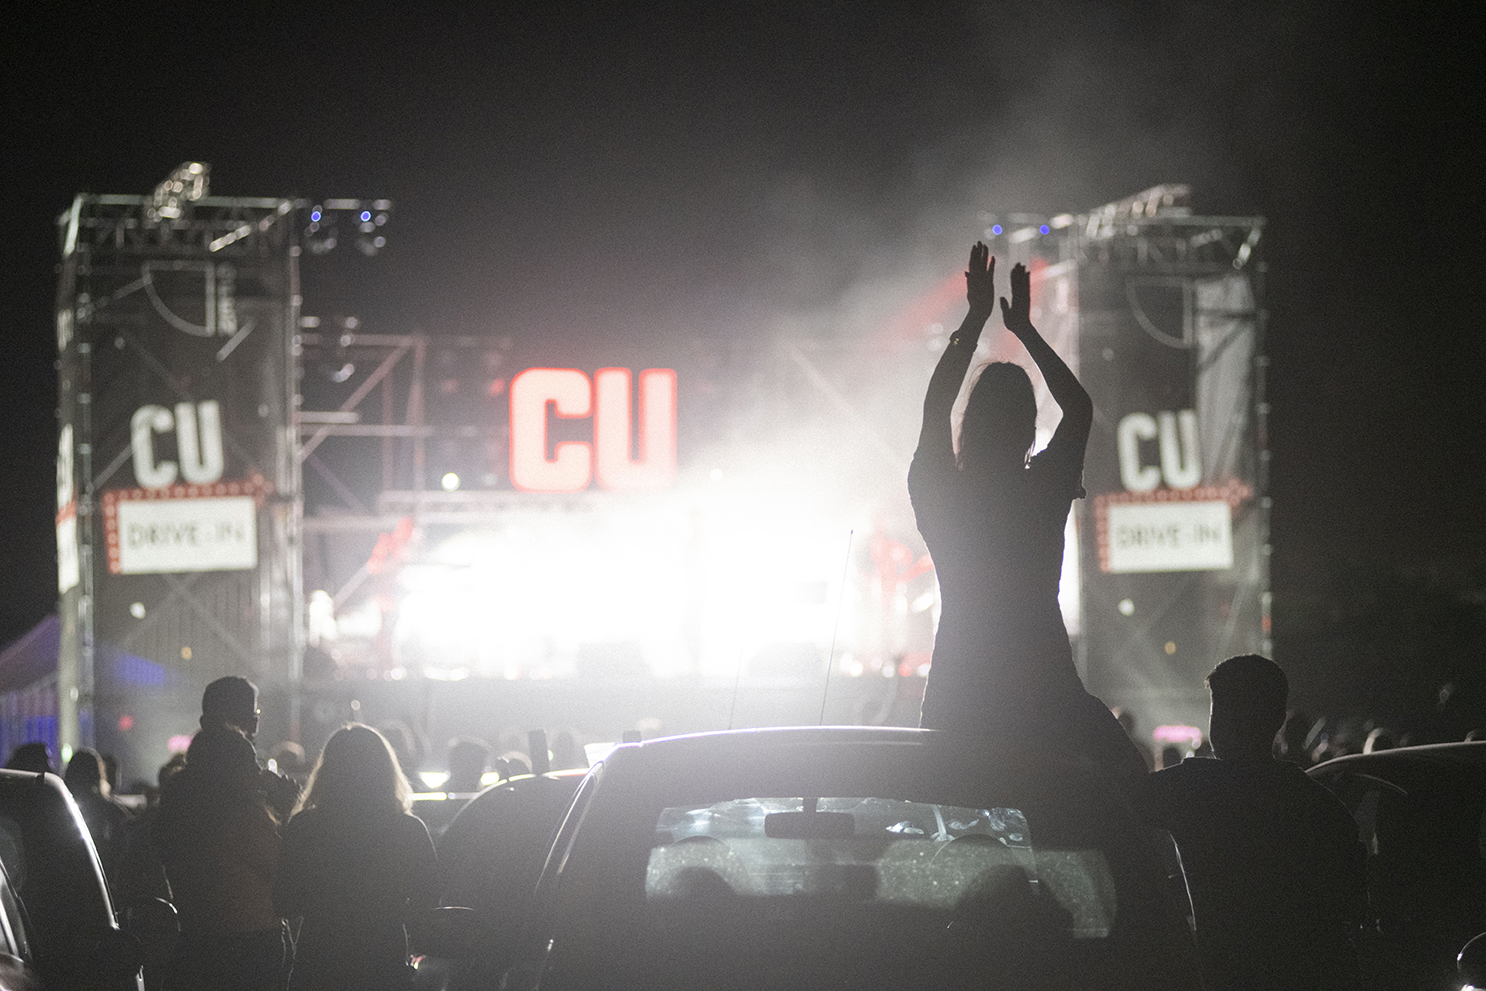 CU Drive-in Concert | Κέντρο Πολιτισμού Ελληνικός Κόσμος